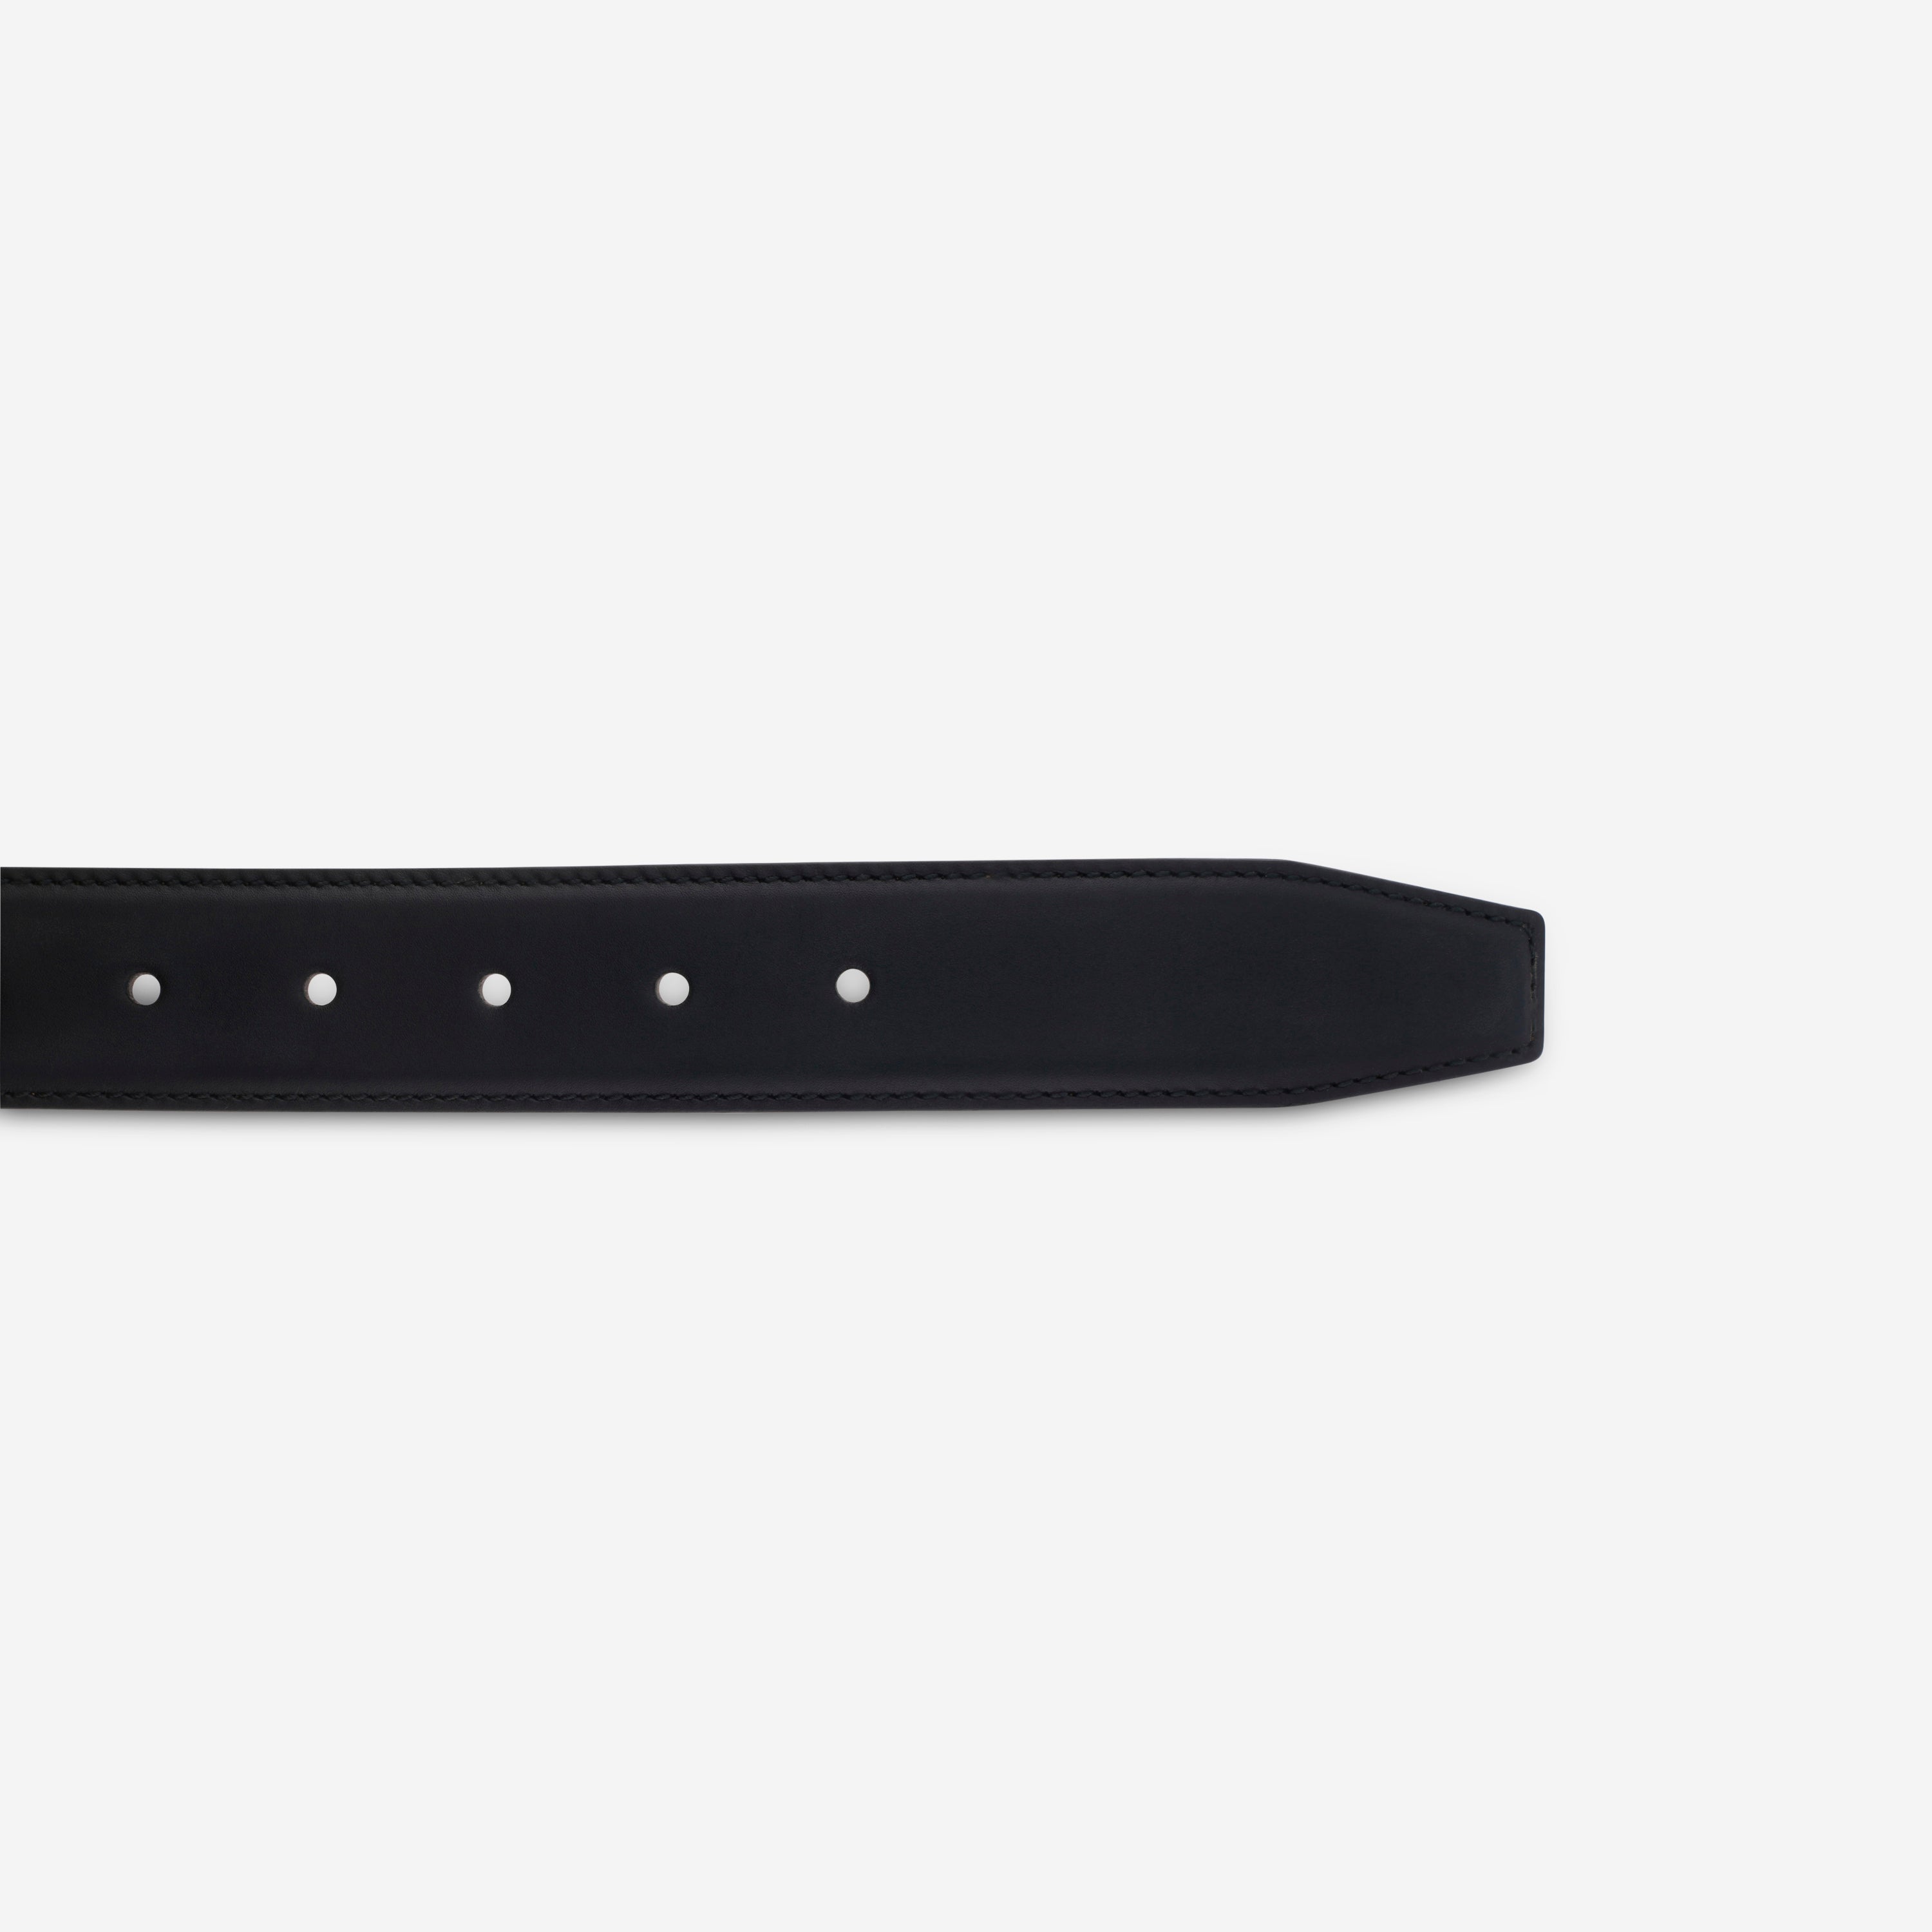 Bally Doylle Men's Black Leather 110cm Belt 6214932 - THE SOLIST